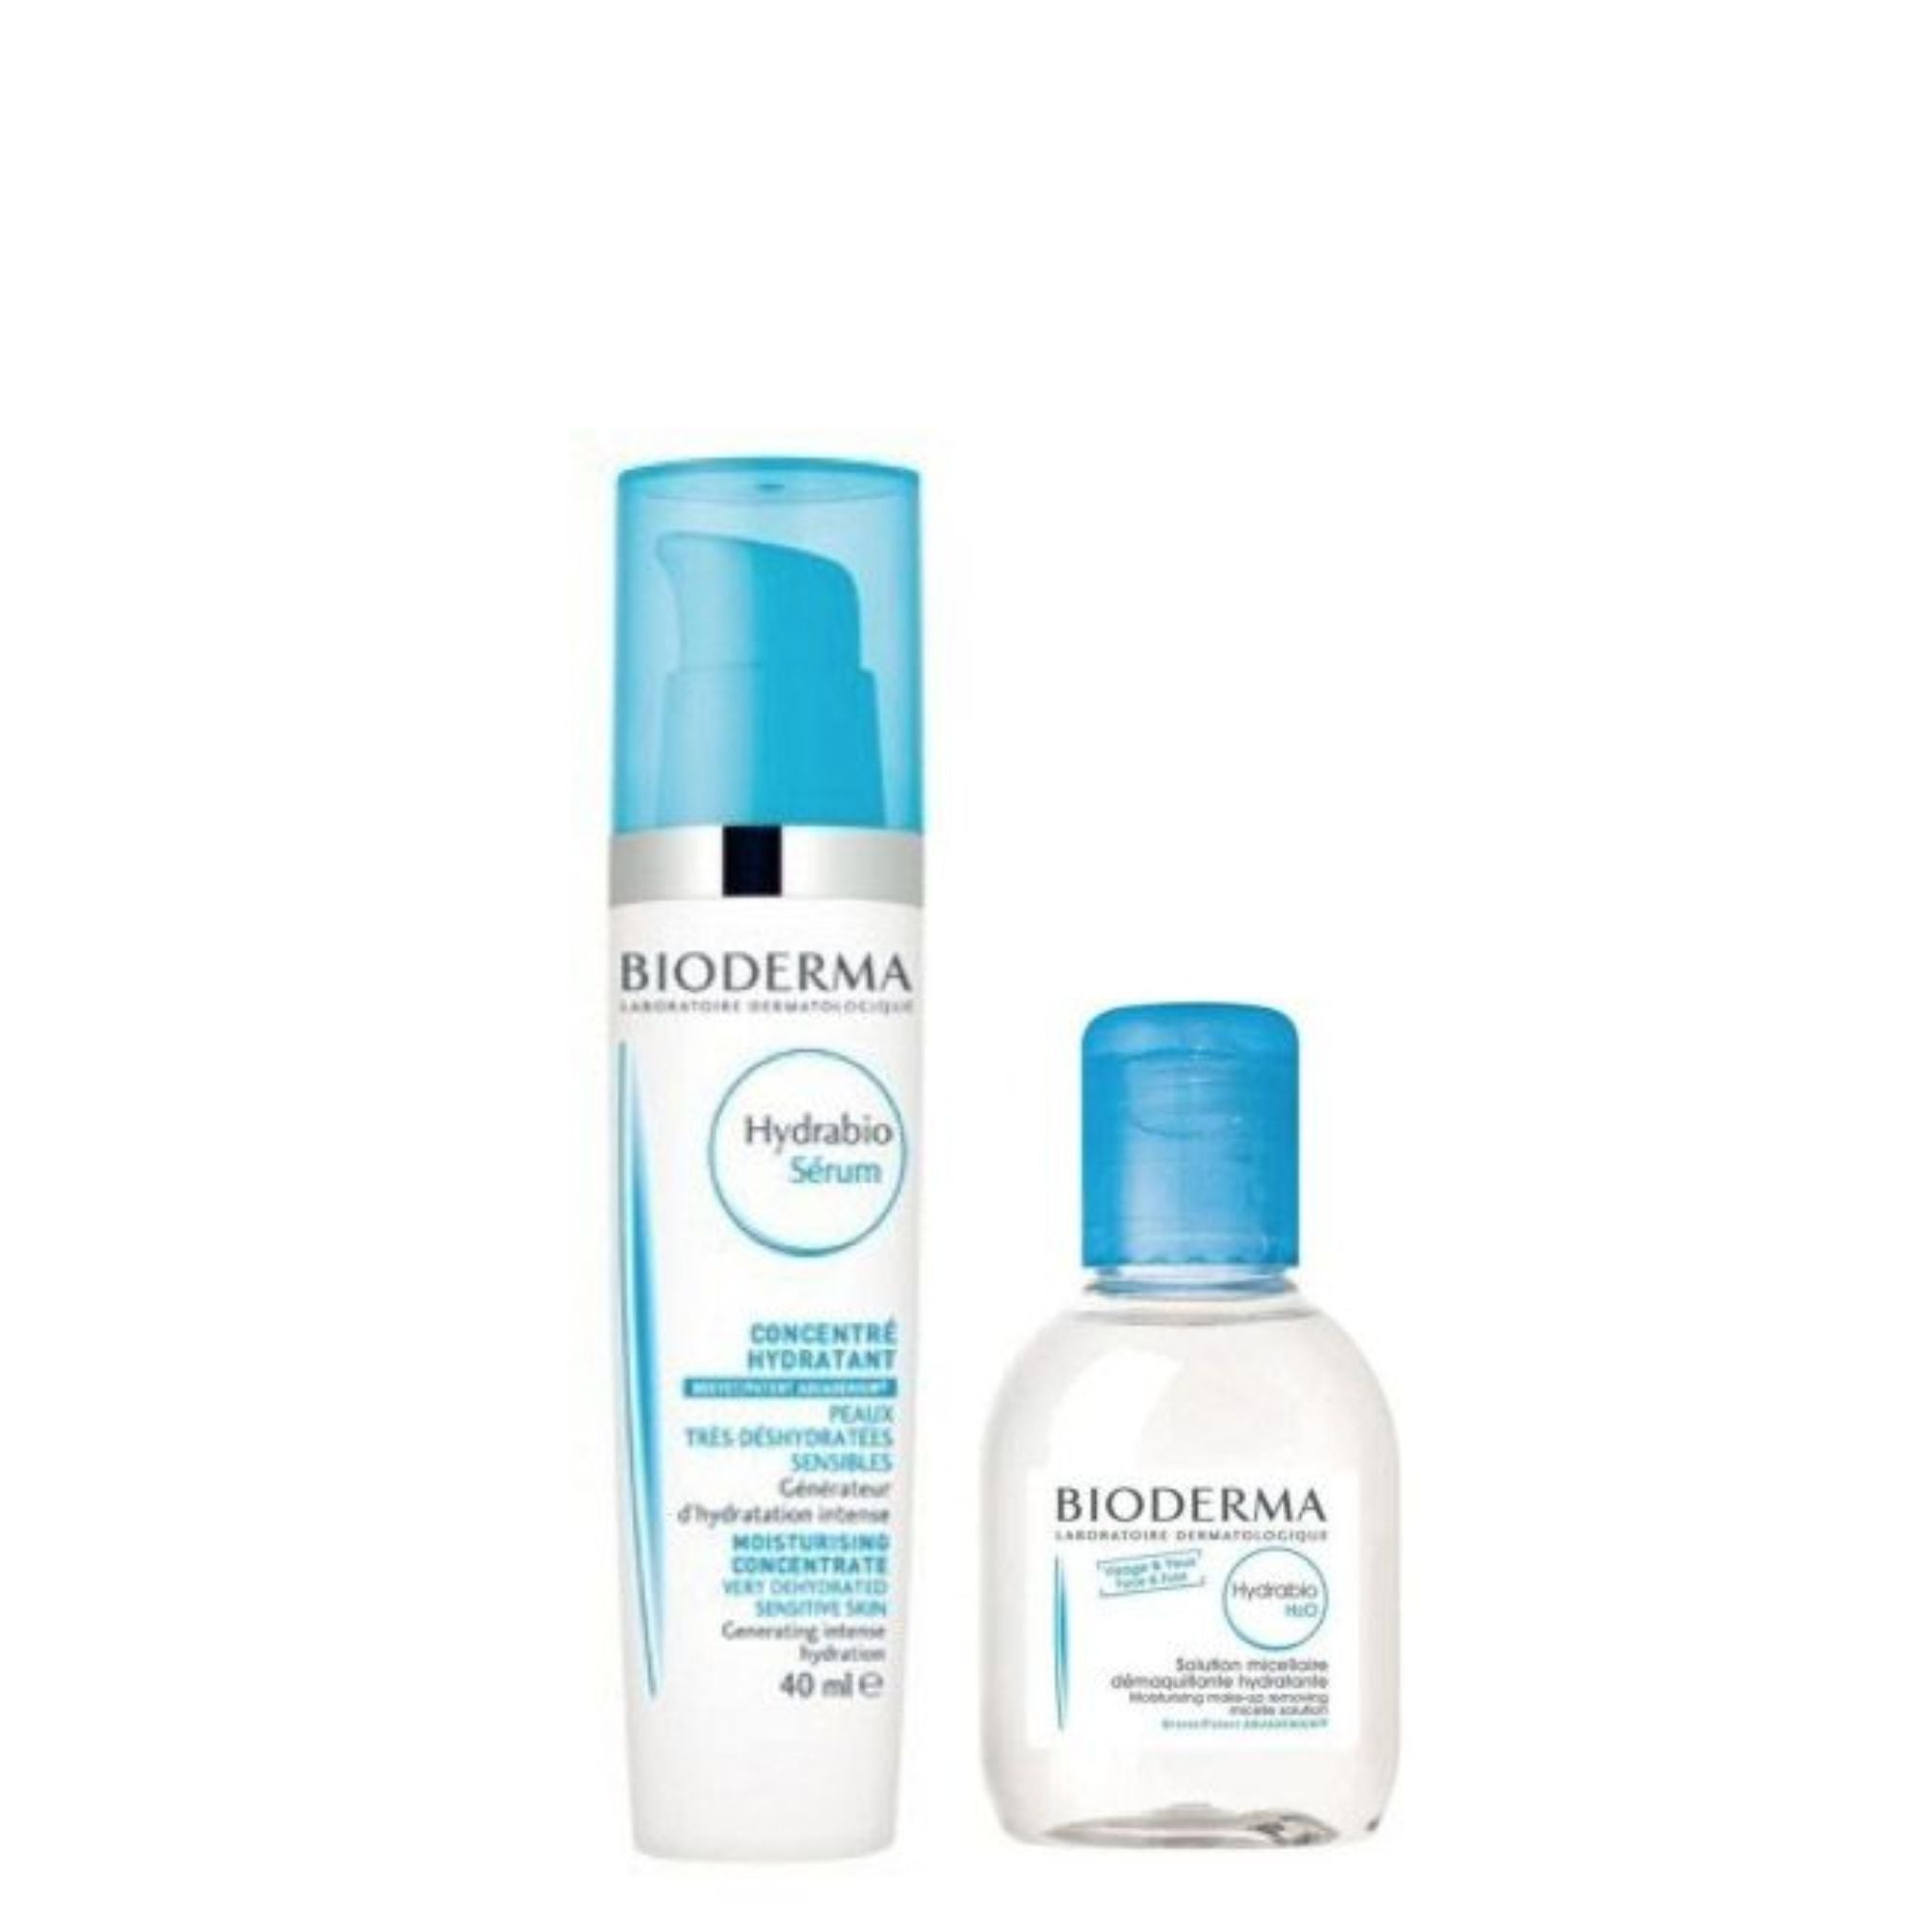 Bioderma Promo Pack: Bioderma Hydrabio Sérum 40ml + Bioderma Hydrabio H2O Micelle Solution 100ml